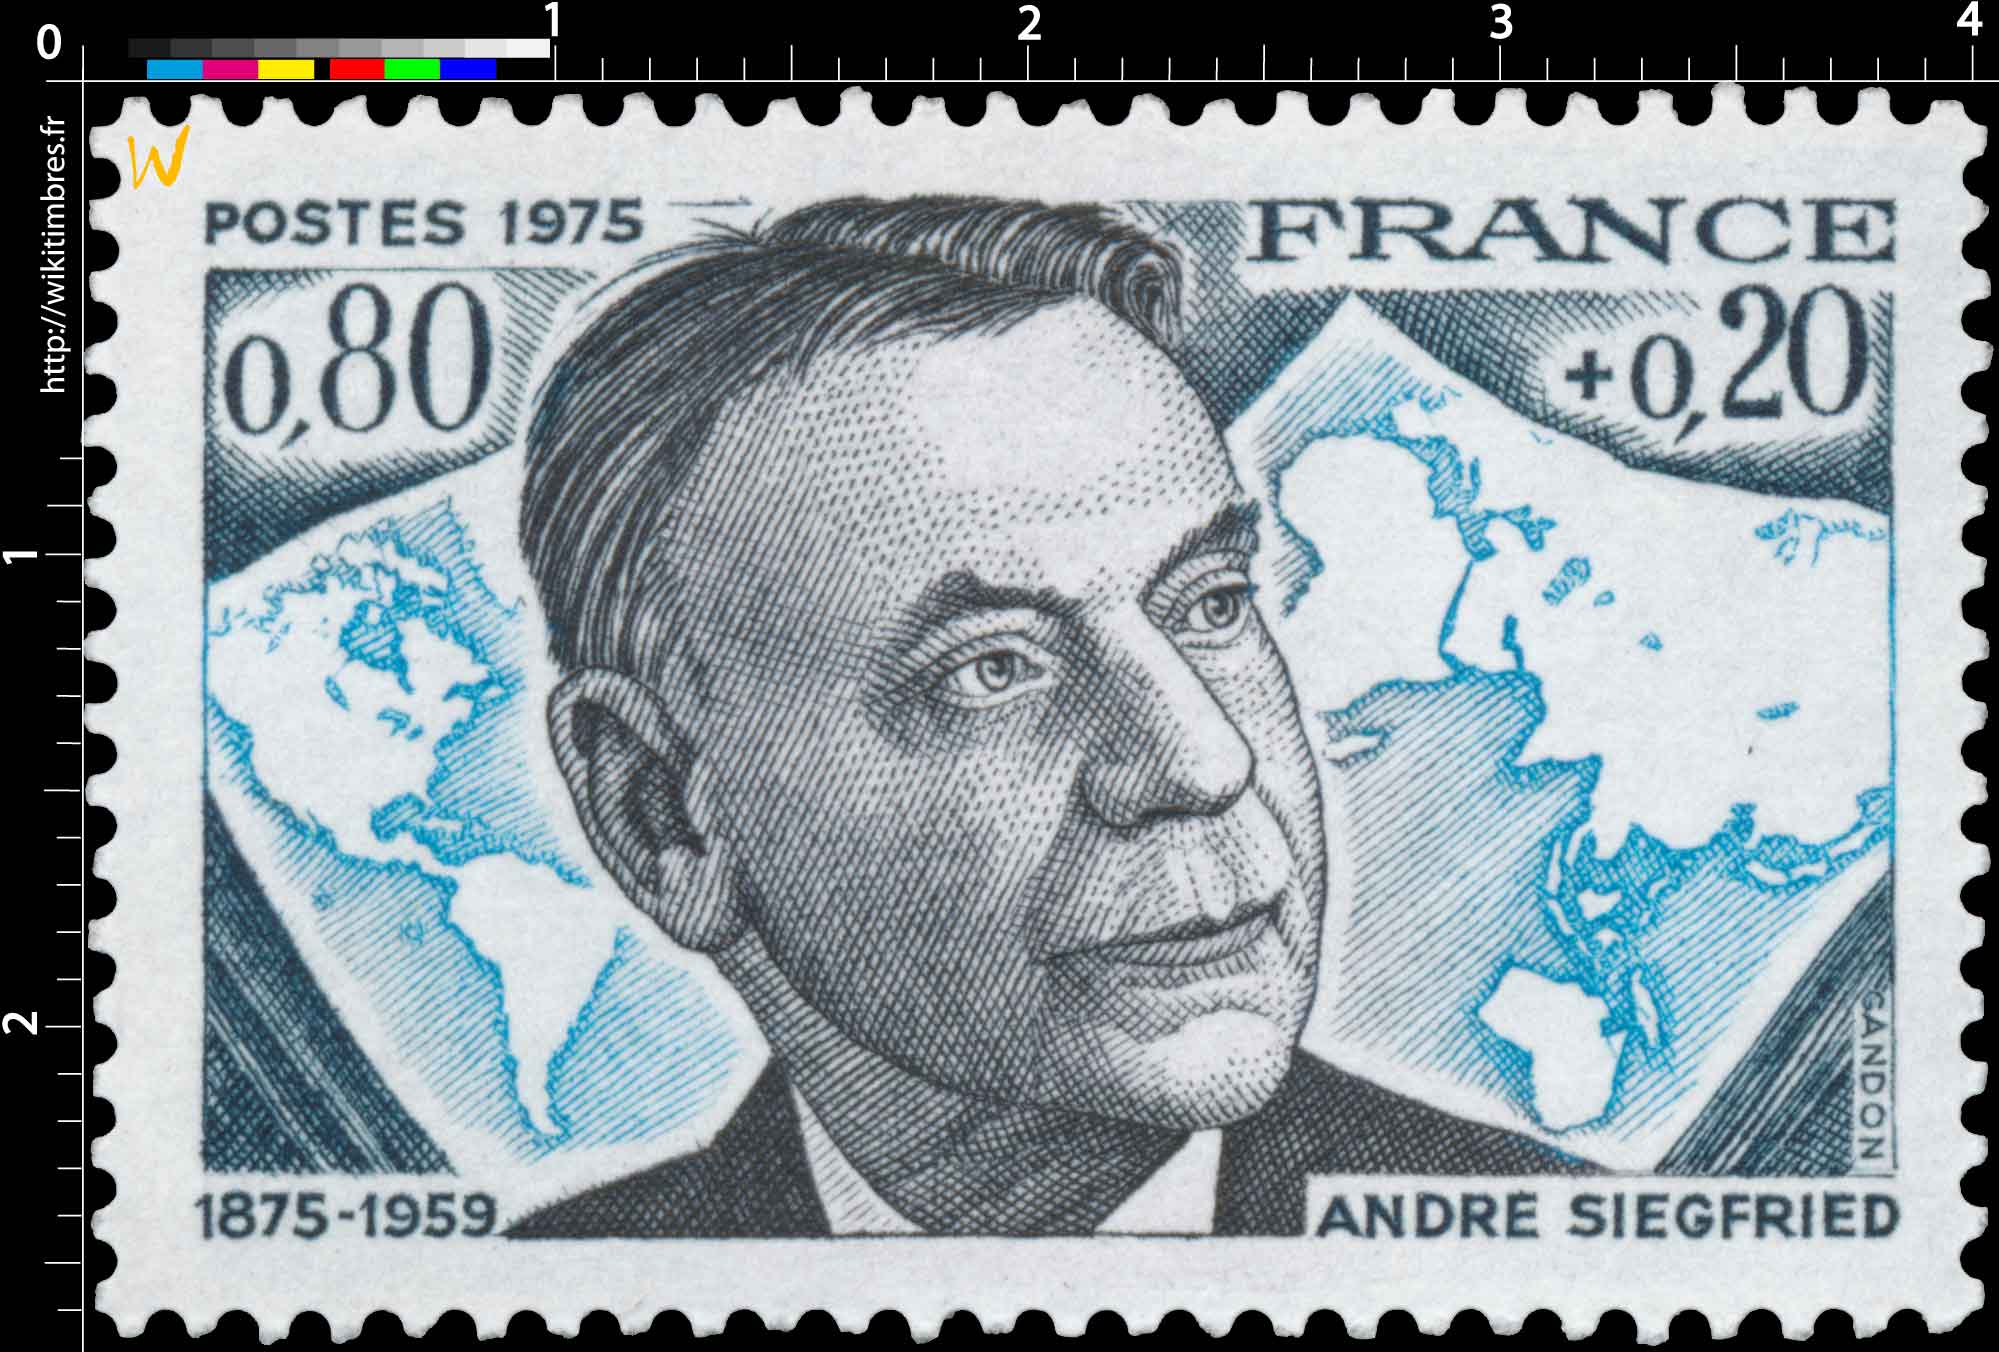 1975 ANDRÉ SIEGFRIED 1875-1959